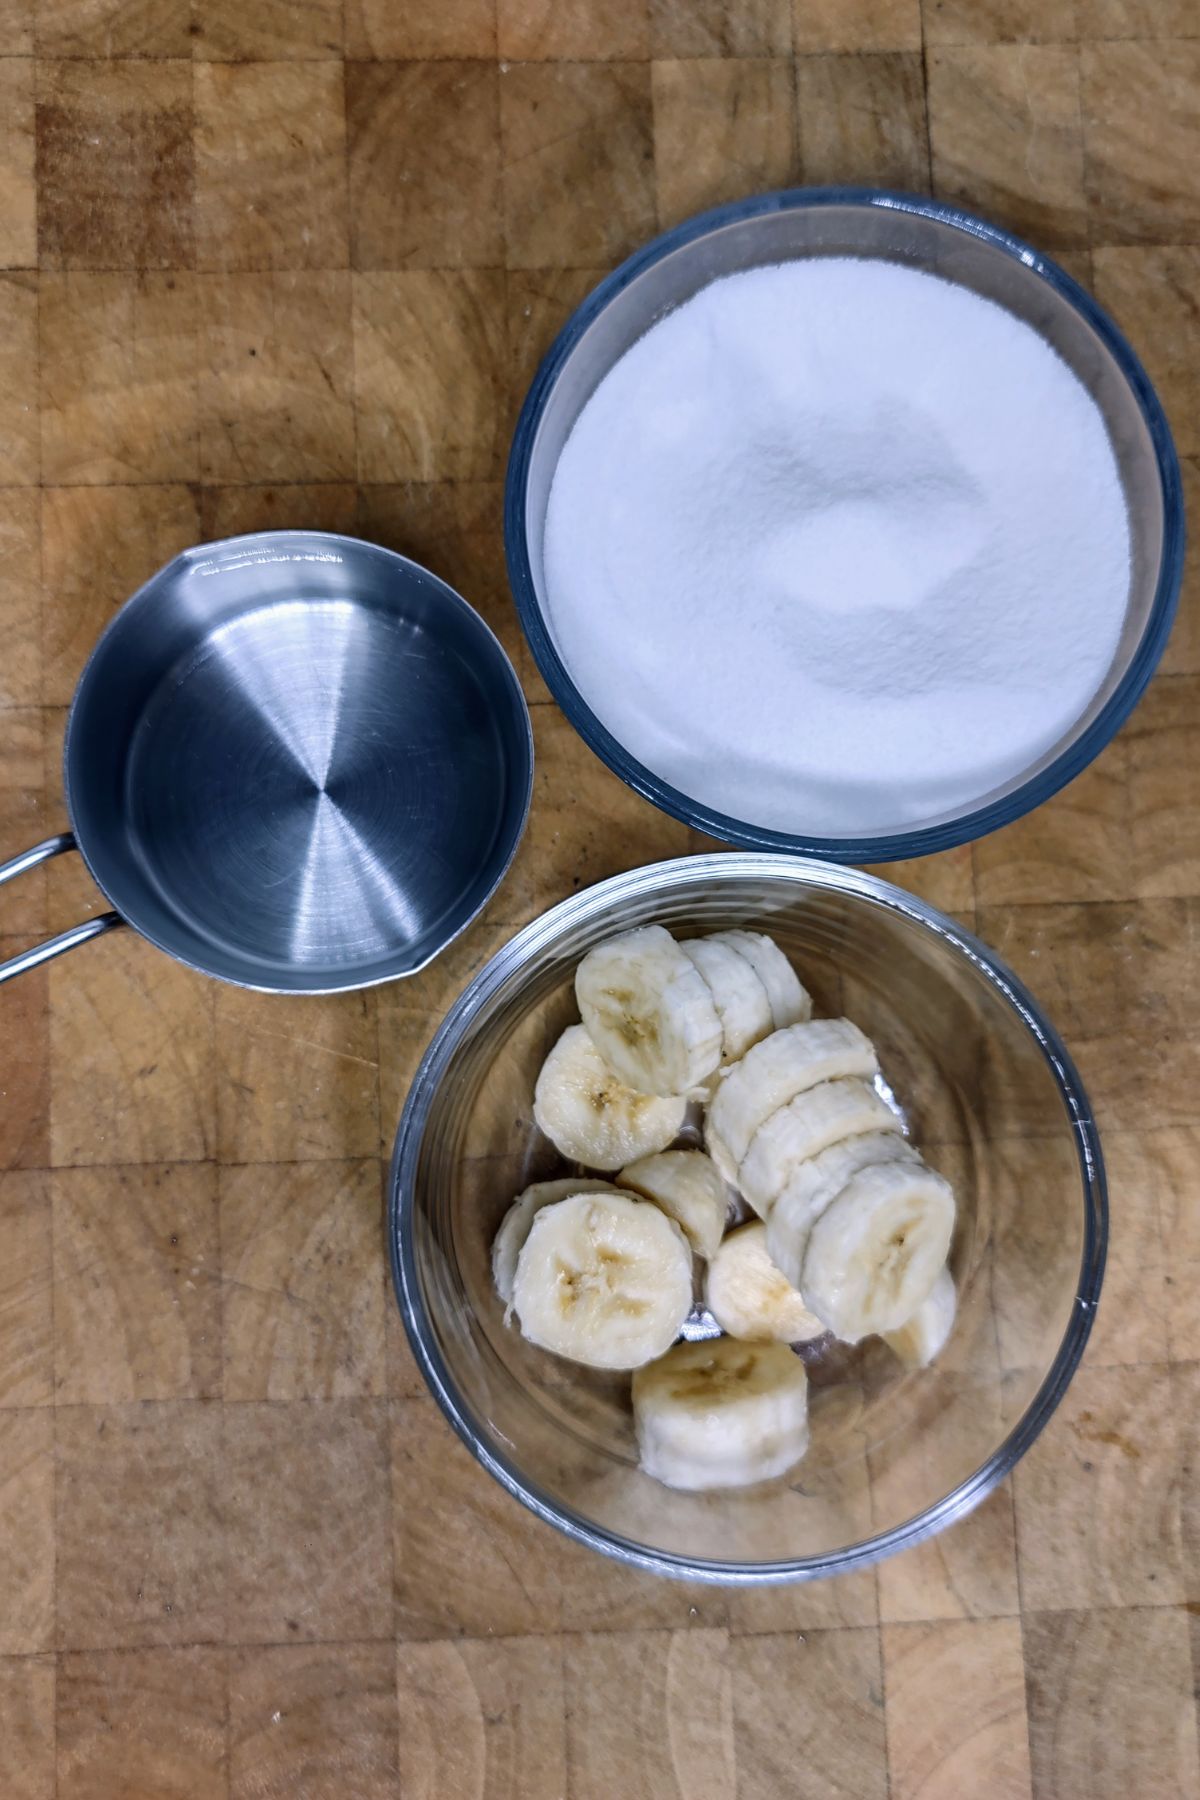 Bowls of banana, sugar and water on a wooden table.